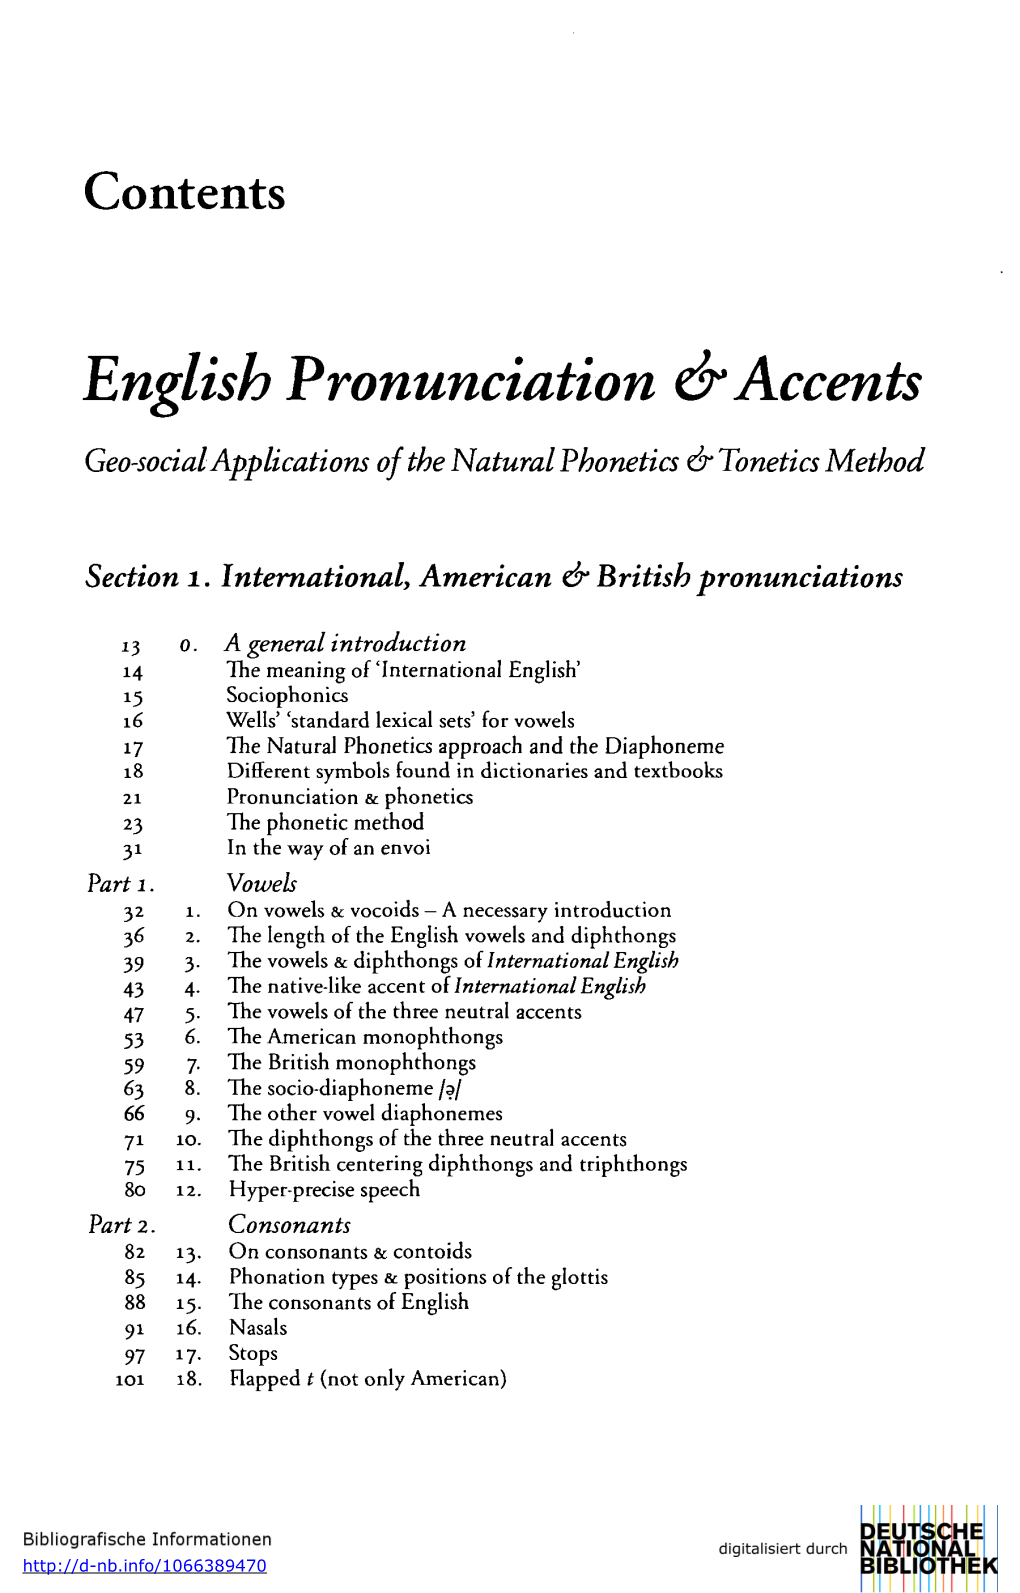 English Pronunciation & Accents